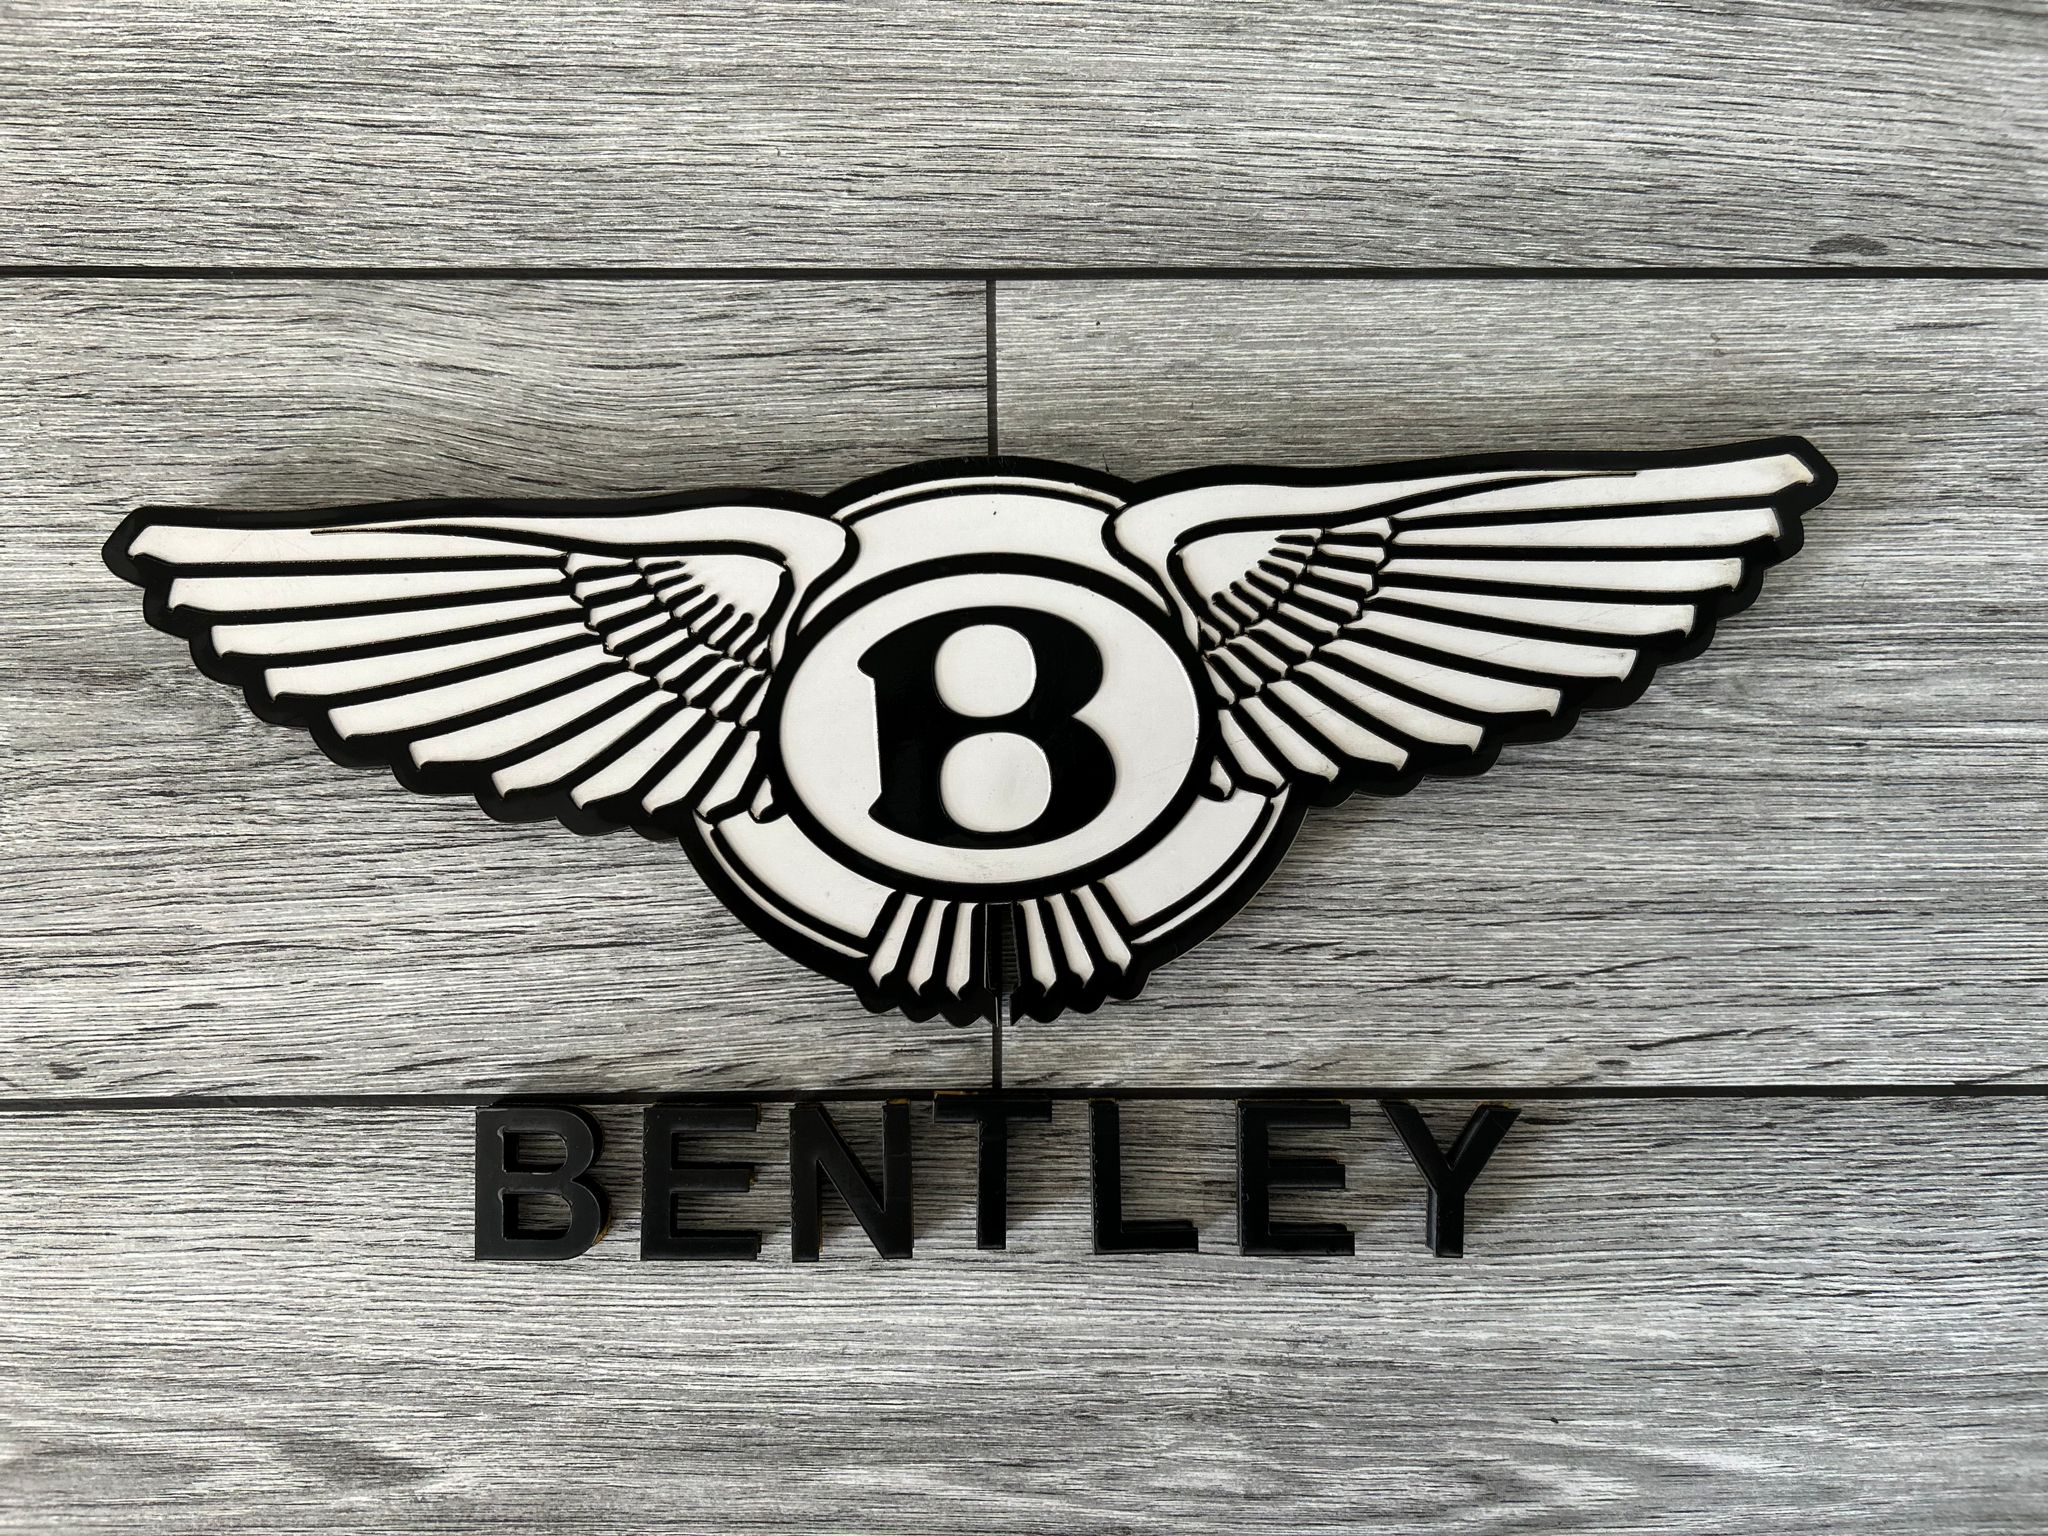 Bentley Wall Decor Bentley Wood Sign Bentley Motor Vehicle Wall Plaque Bentley Wall Art